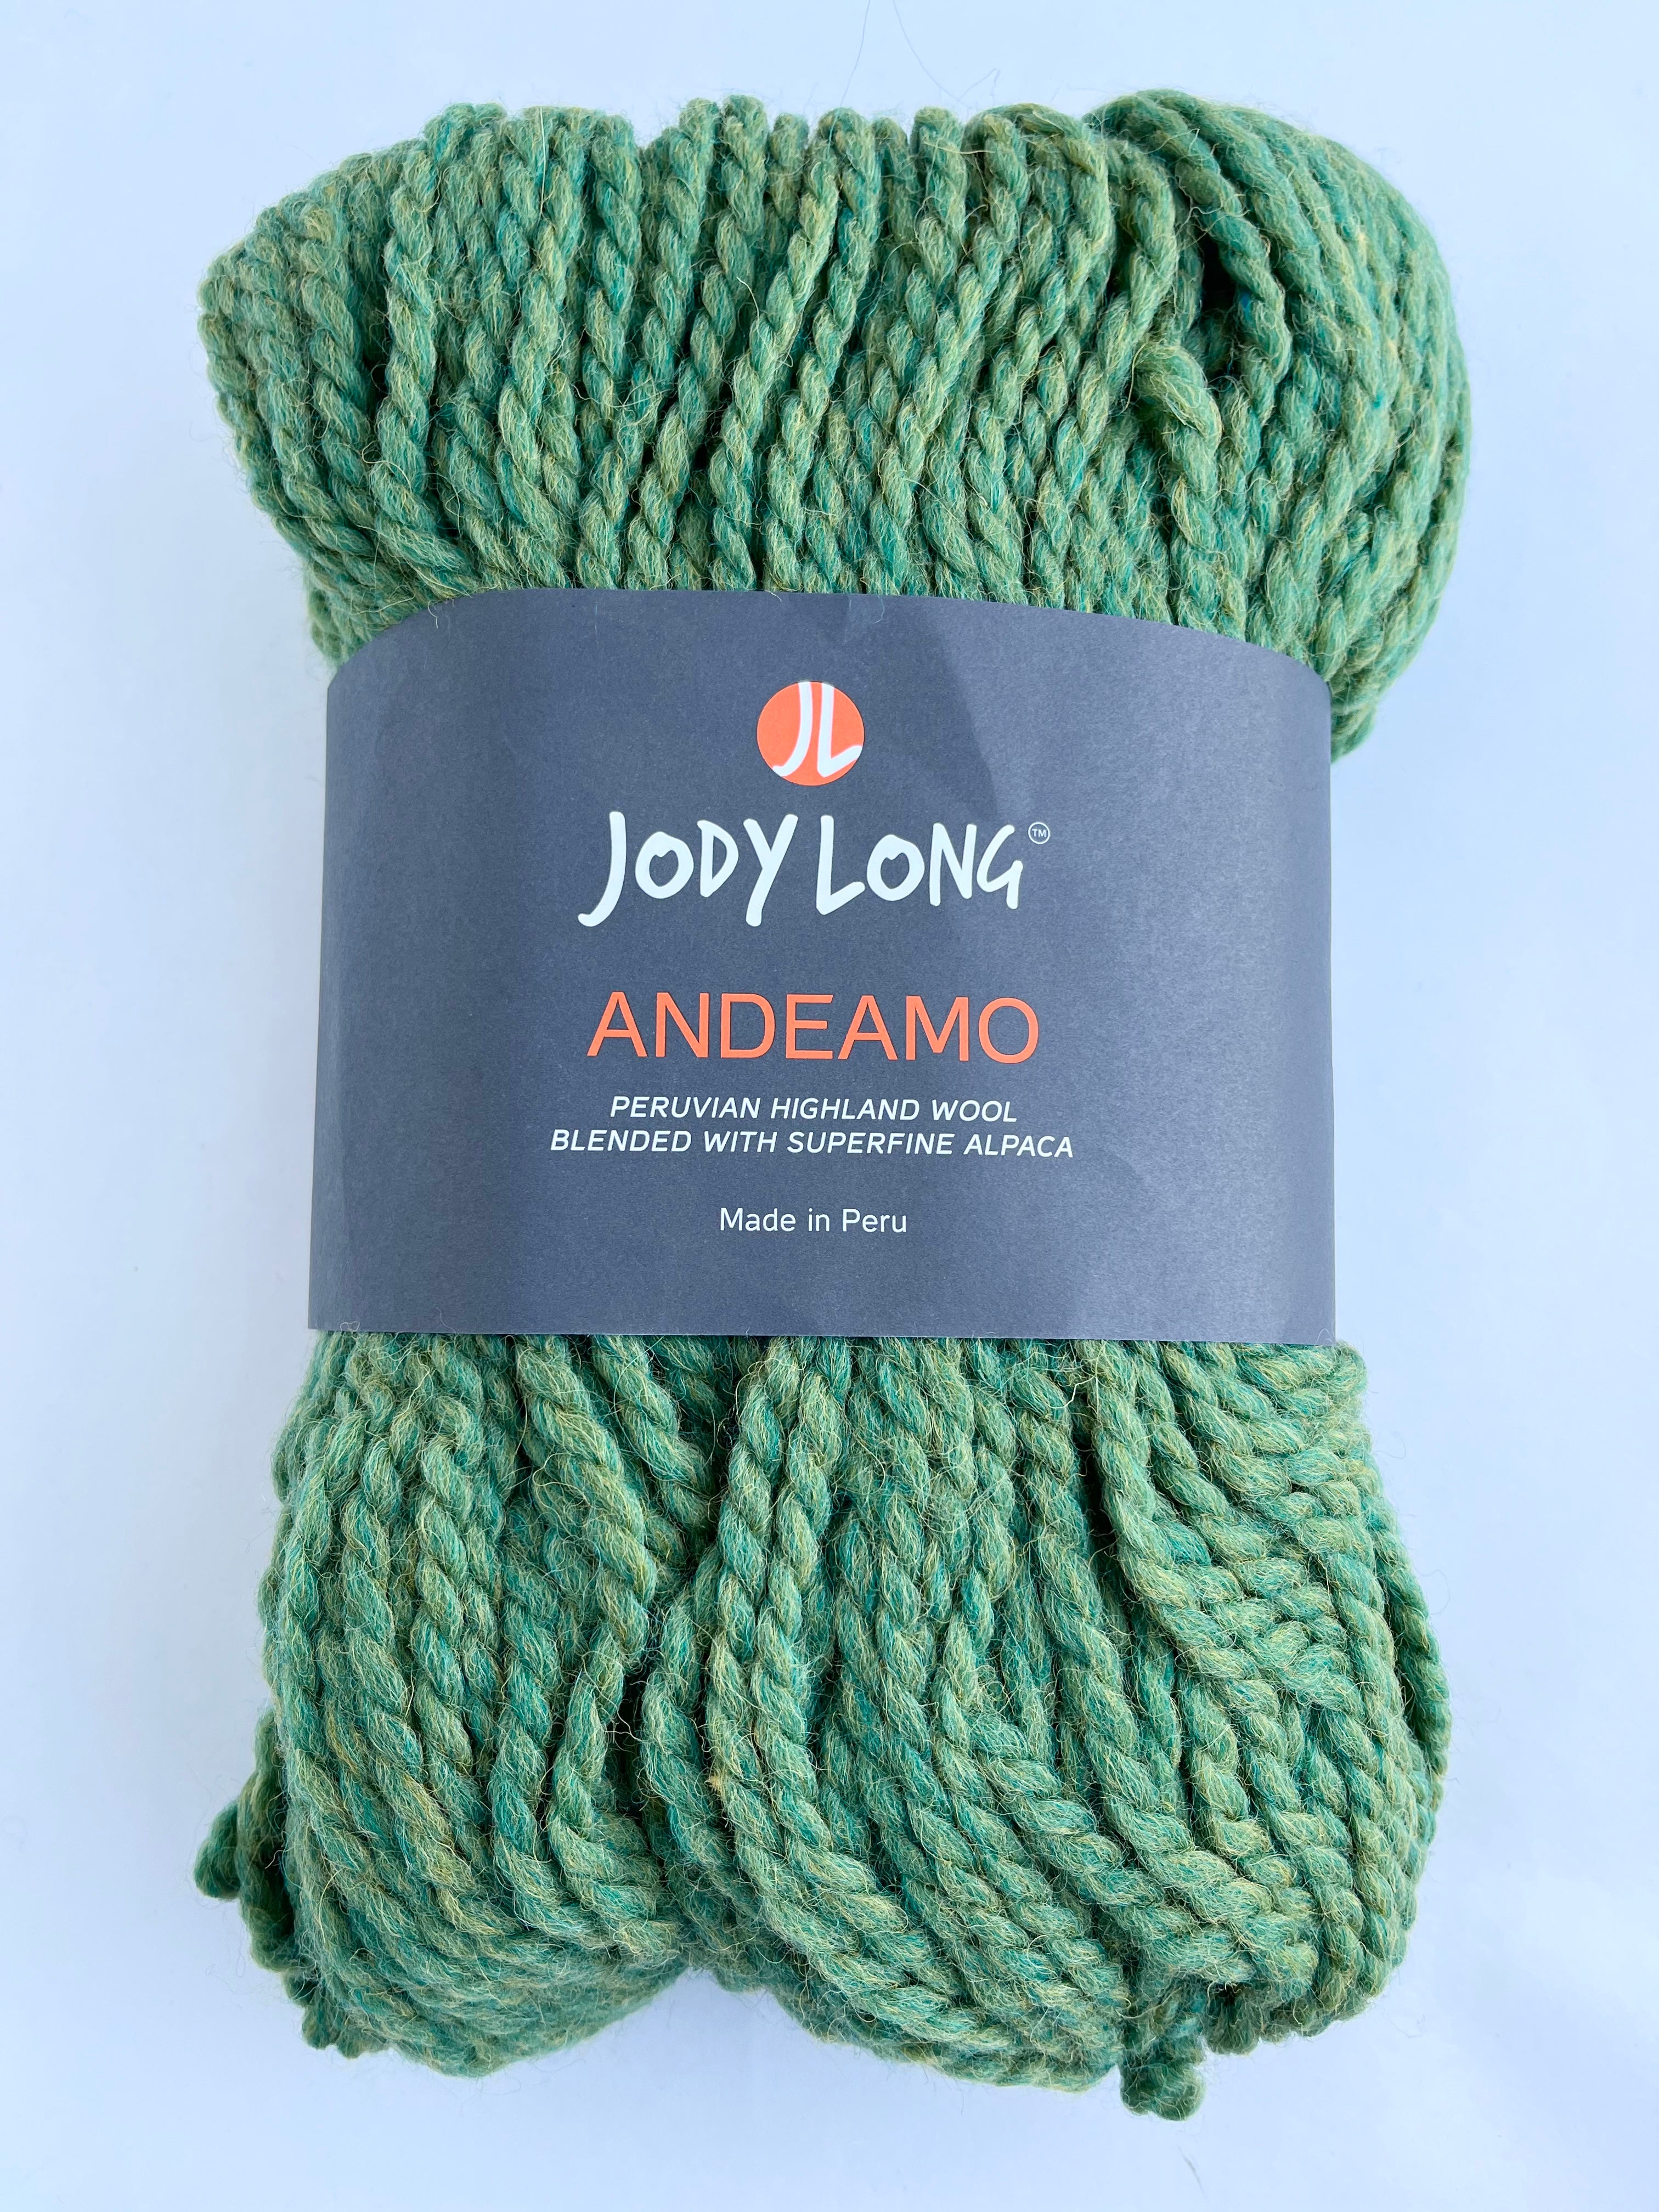 Emerald 15 - Andeamo from Jody Long